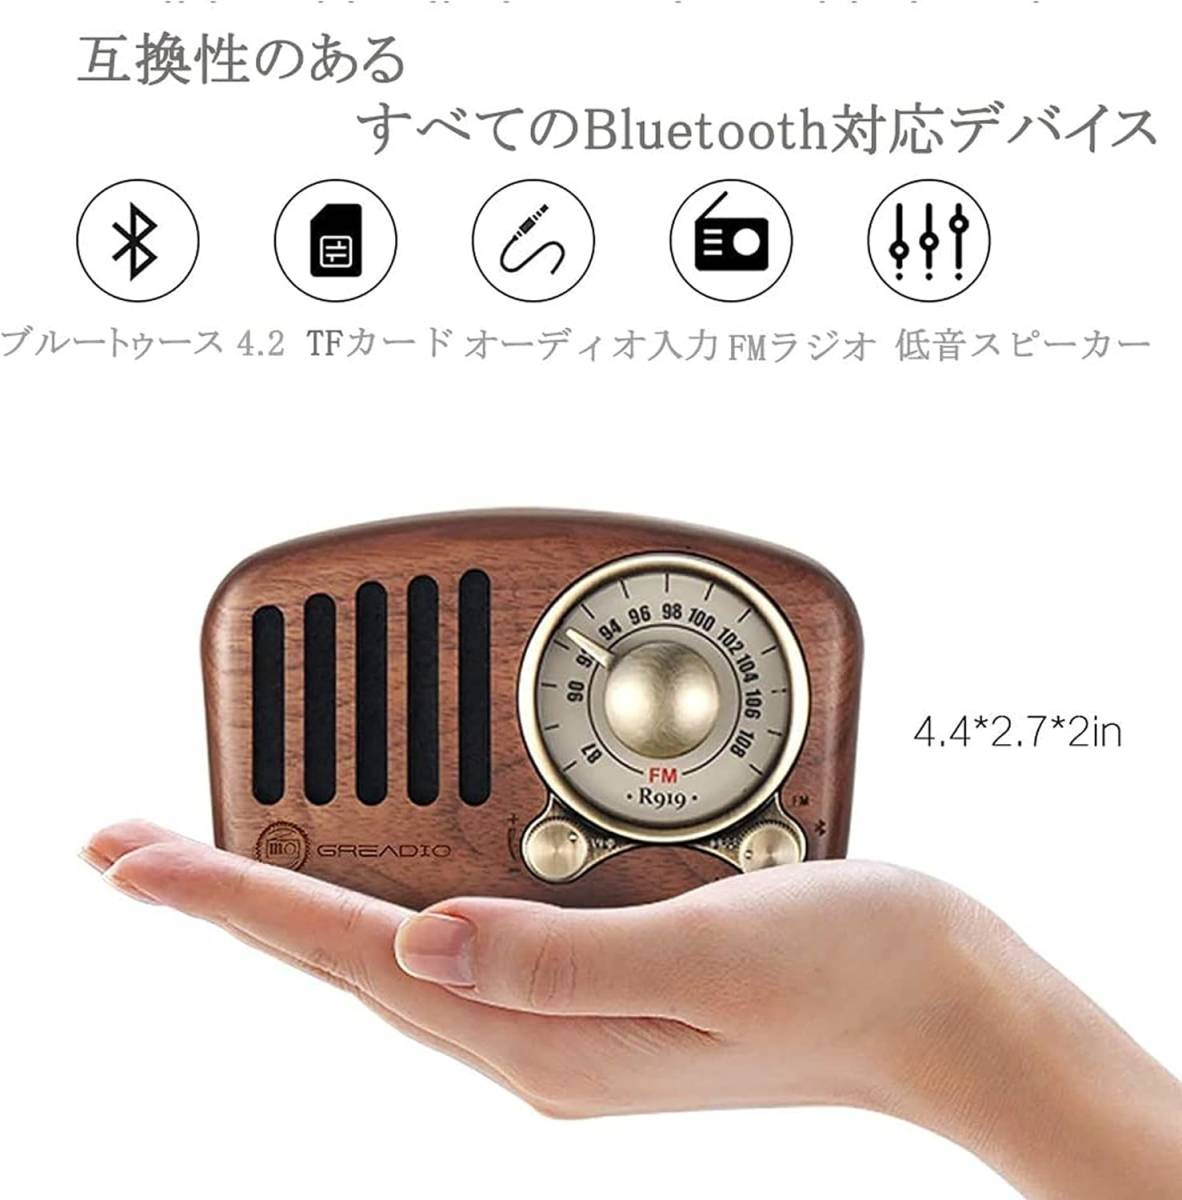  retro mobile radio portable radio FM wooden USB rechargeable Brown stylish large volume small size Minya geo Bluetooth wonderful present . you .